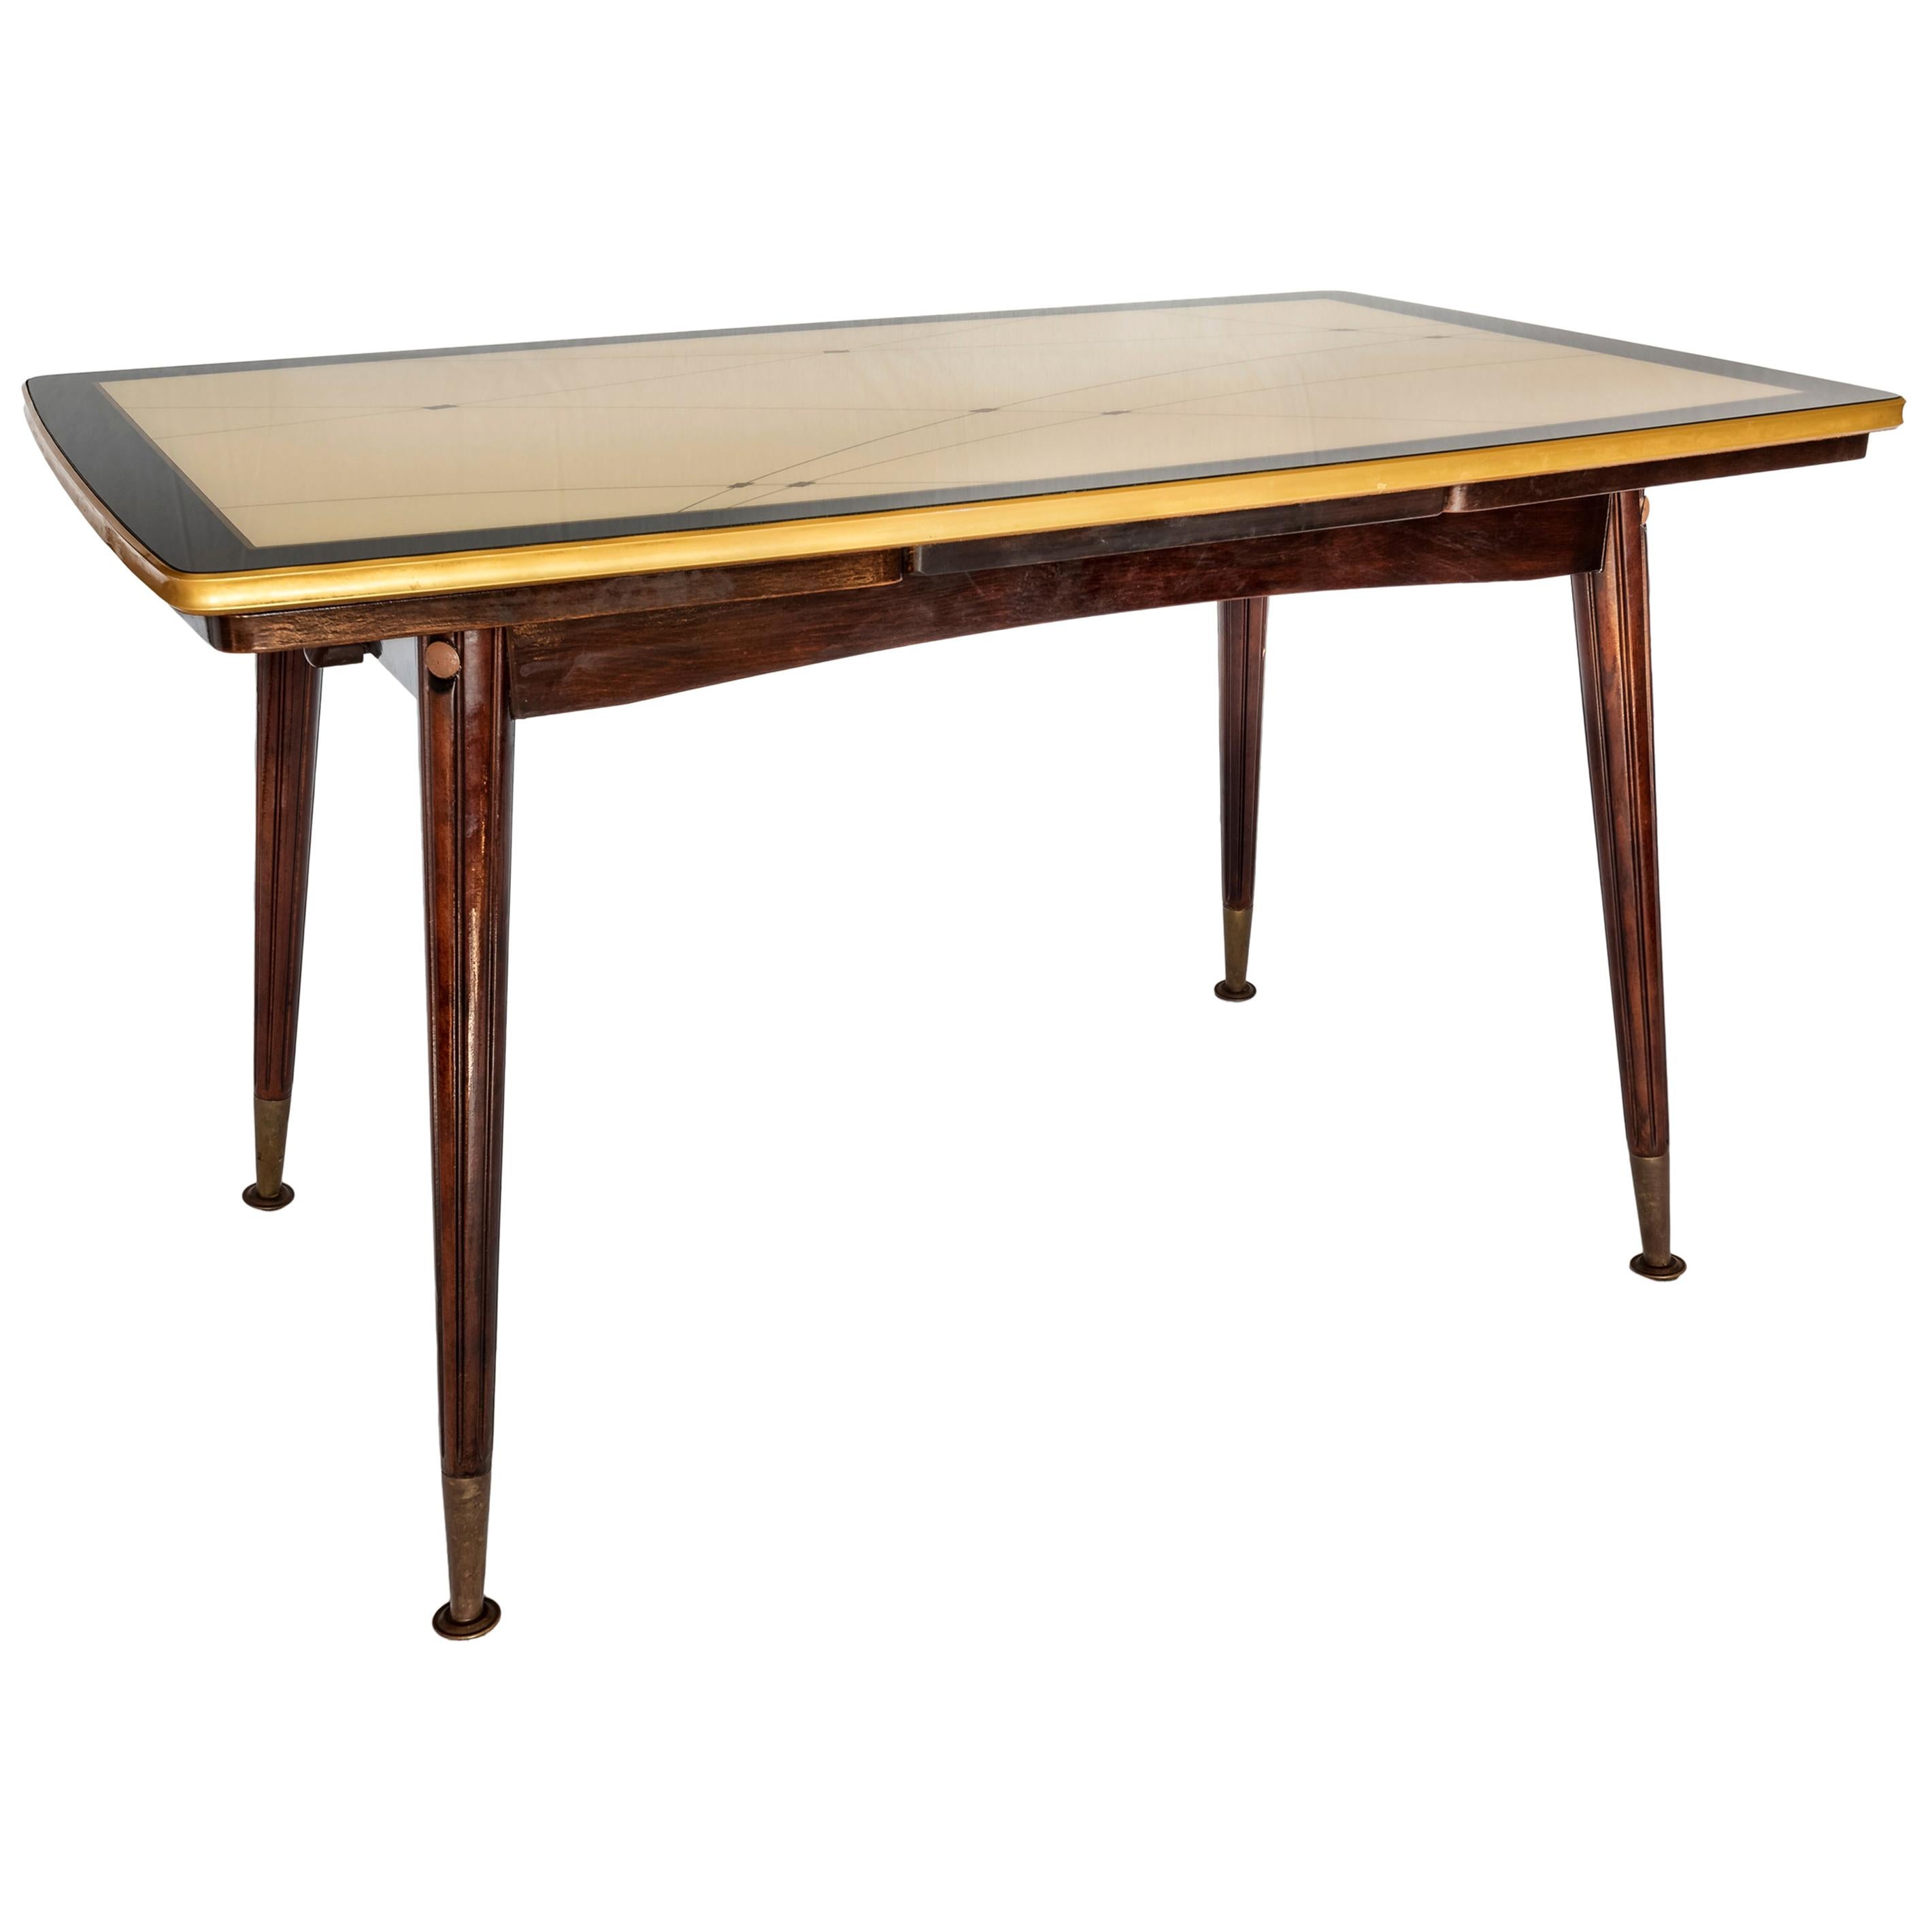 Midcentury Mahogany Extendable Lifting Table, Resopal Glass Plate, Ilse Möbel